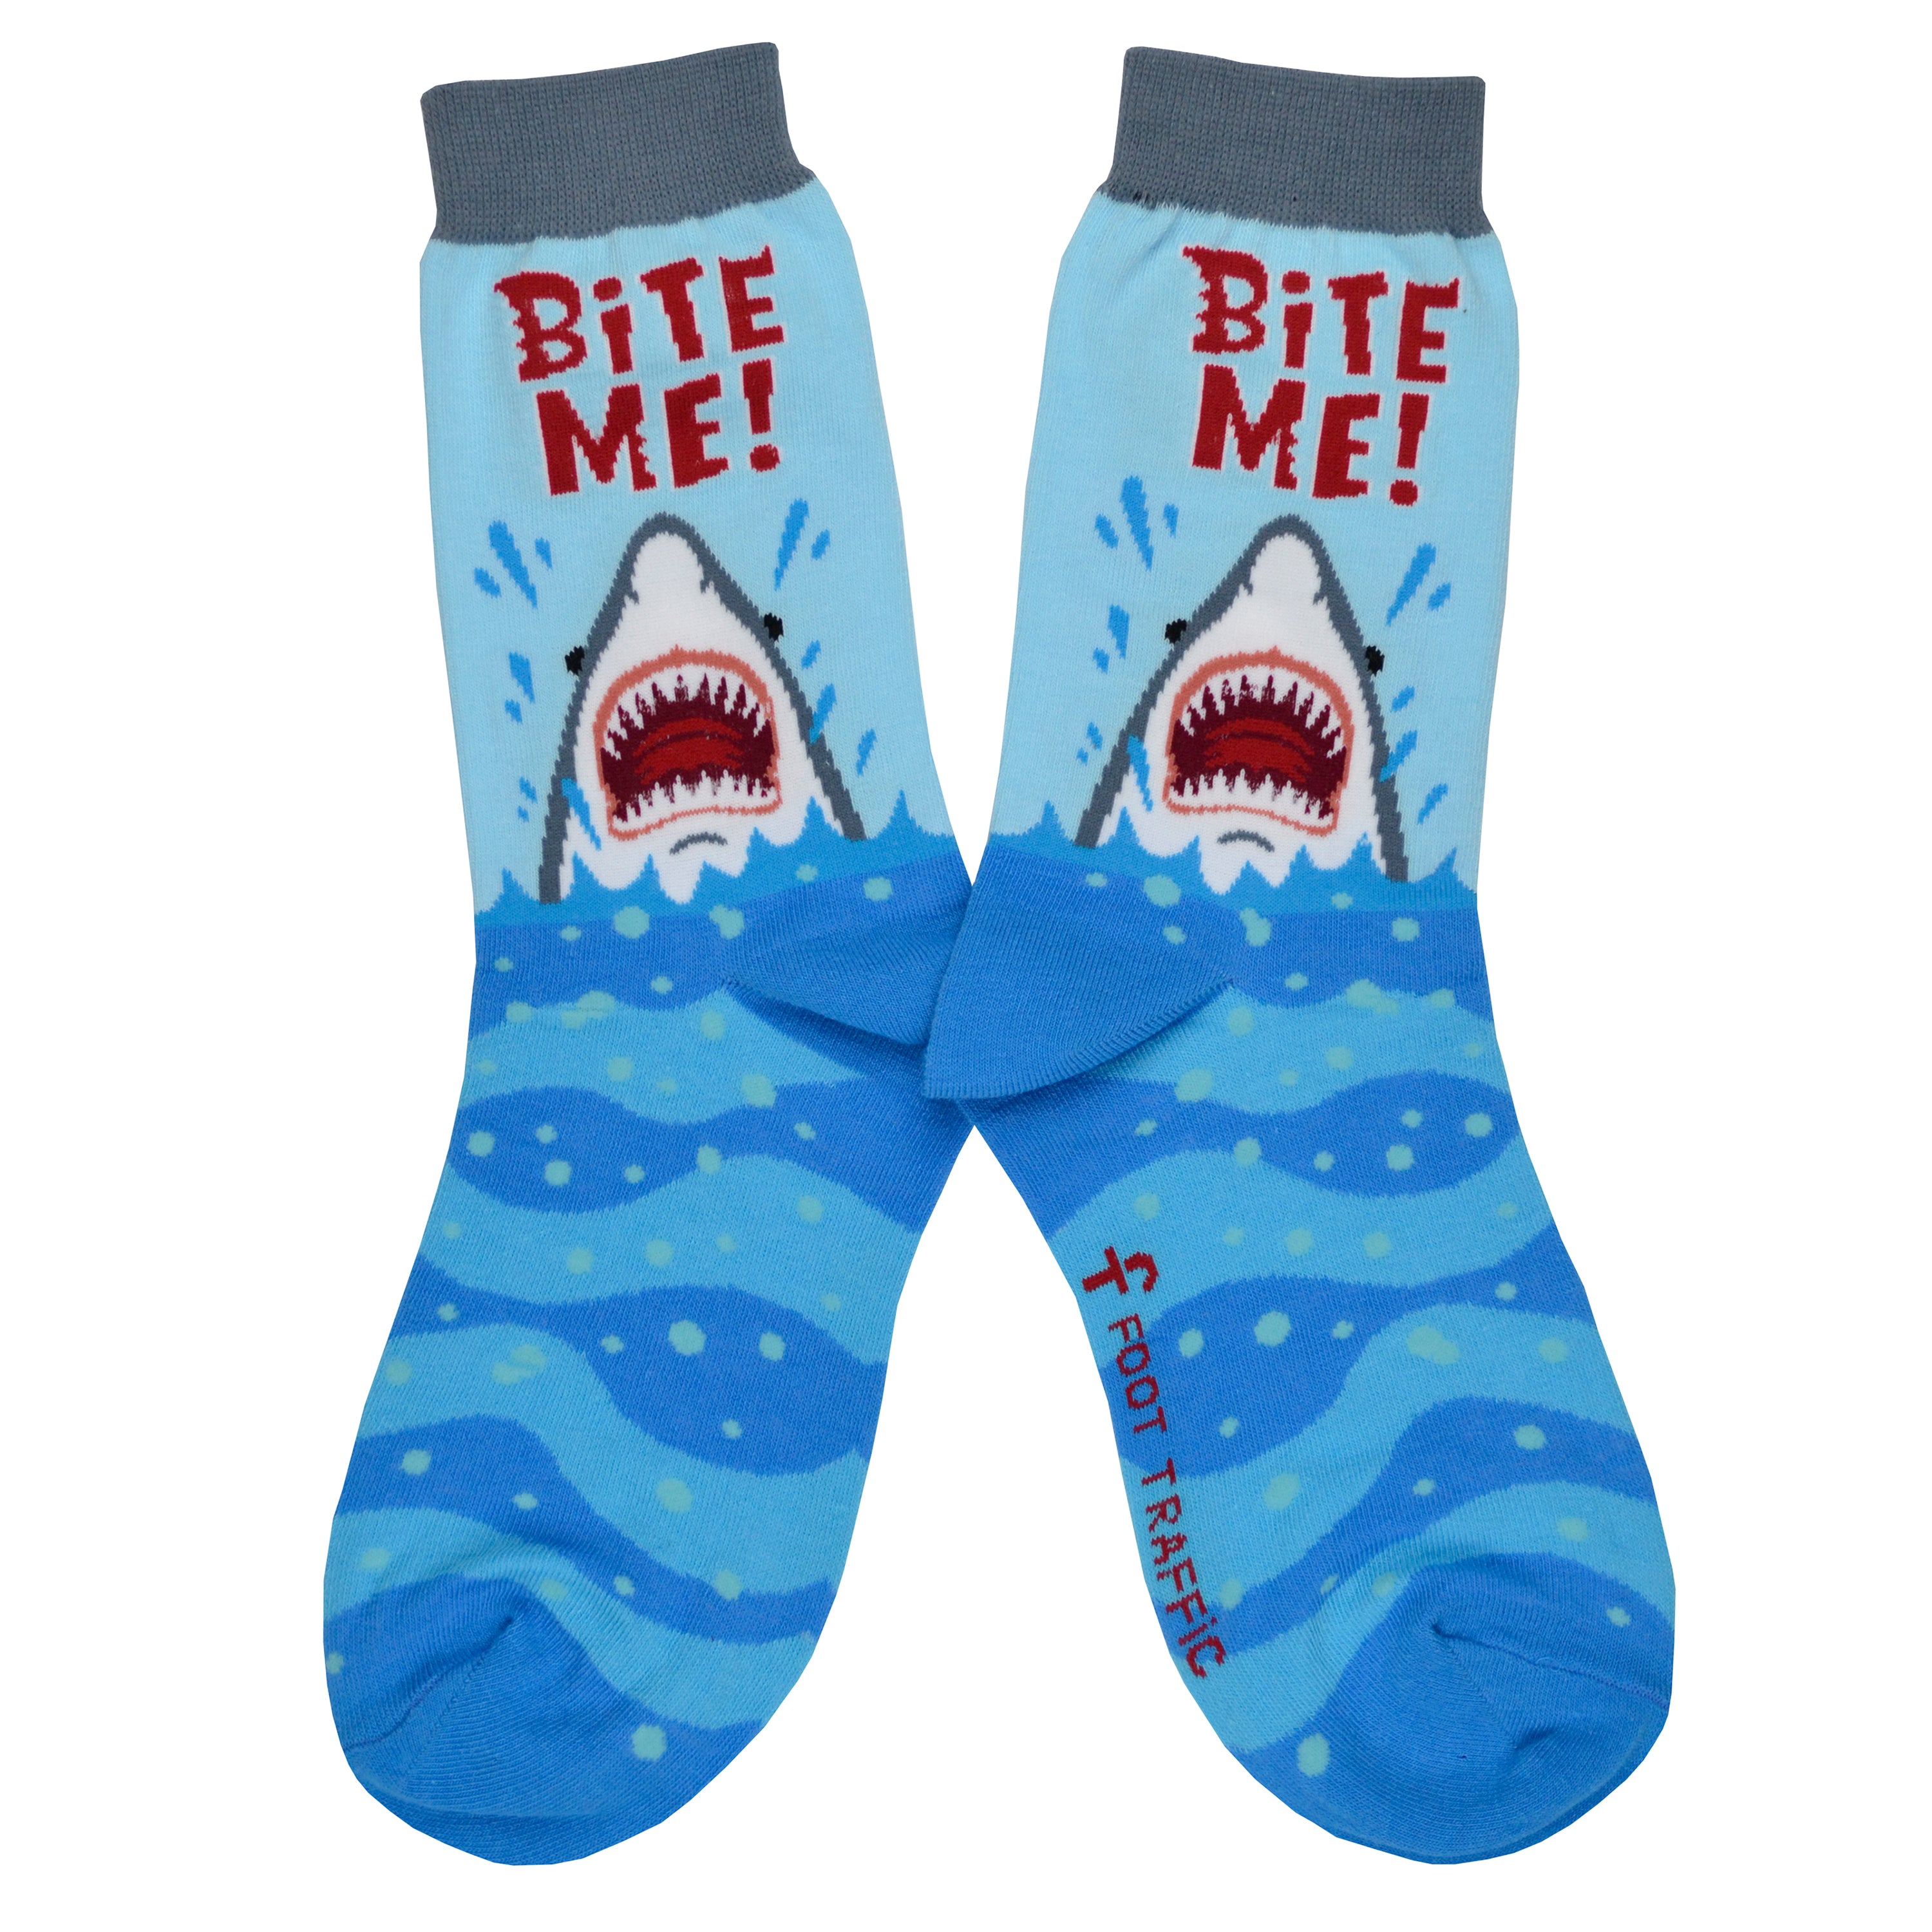 Women's Bite Me! Socks | Sockshop